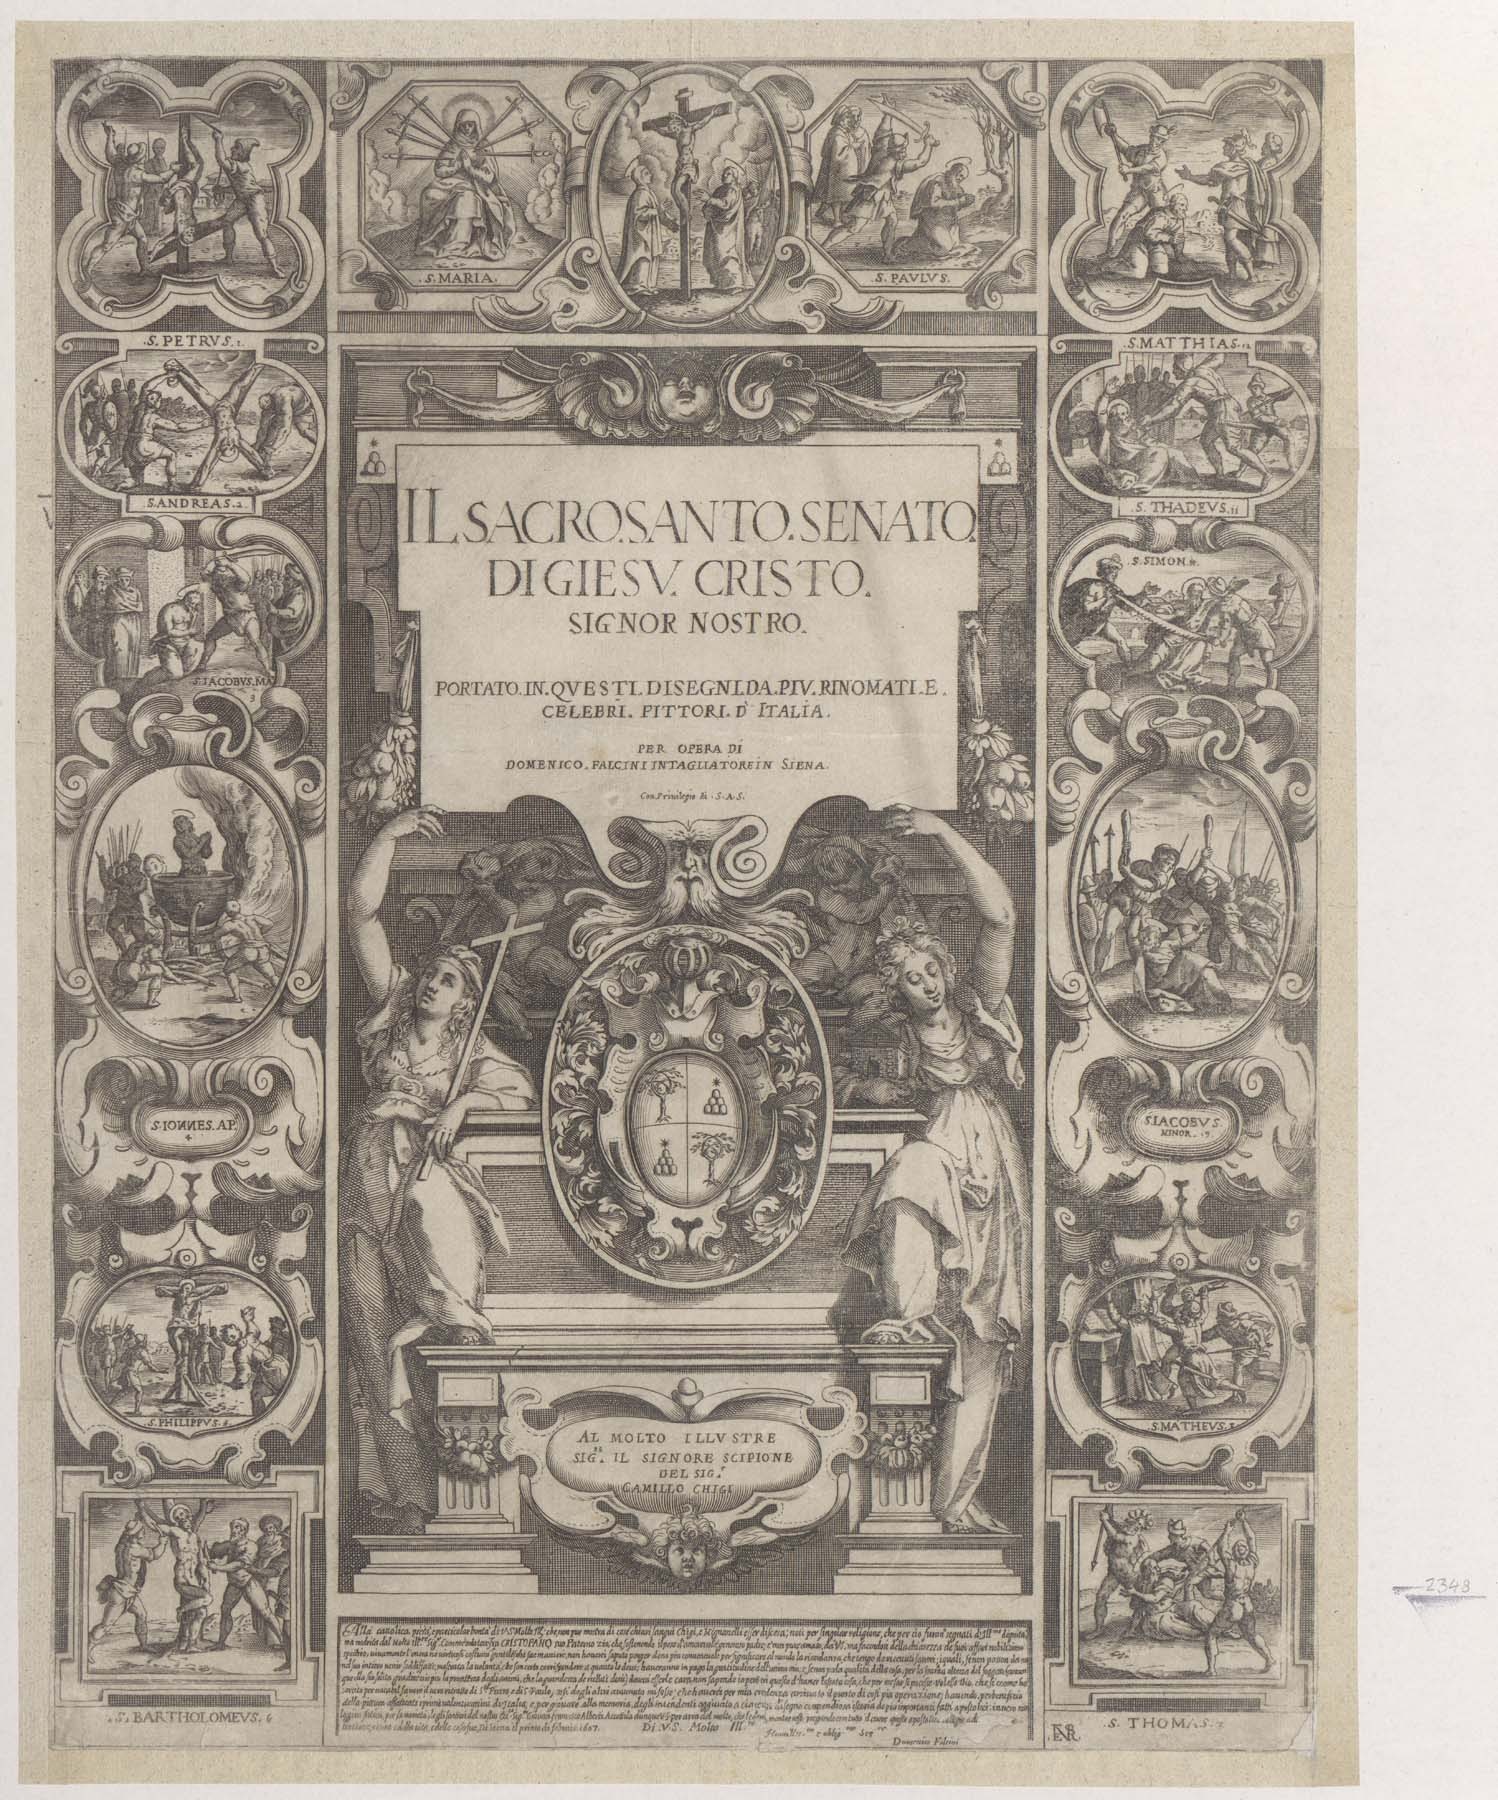 Il Sacro Santo Senato di Giesu Cristo - címlap 1607 (Pannonhalma Főapátsági Múzeum CC BY-NC-SA)